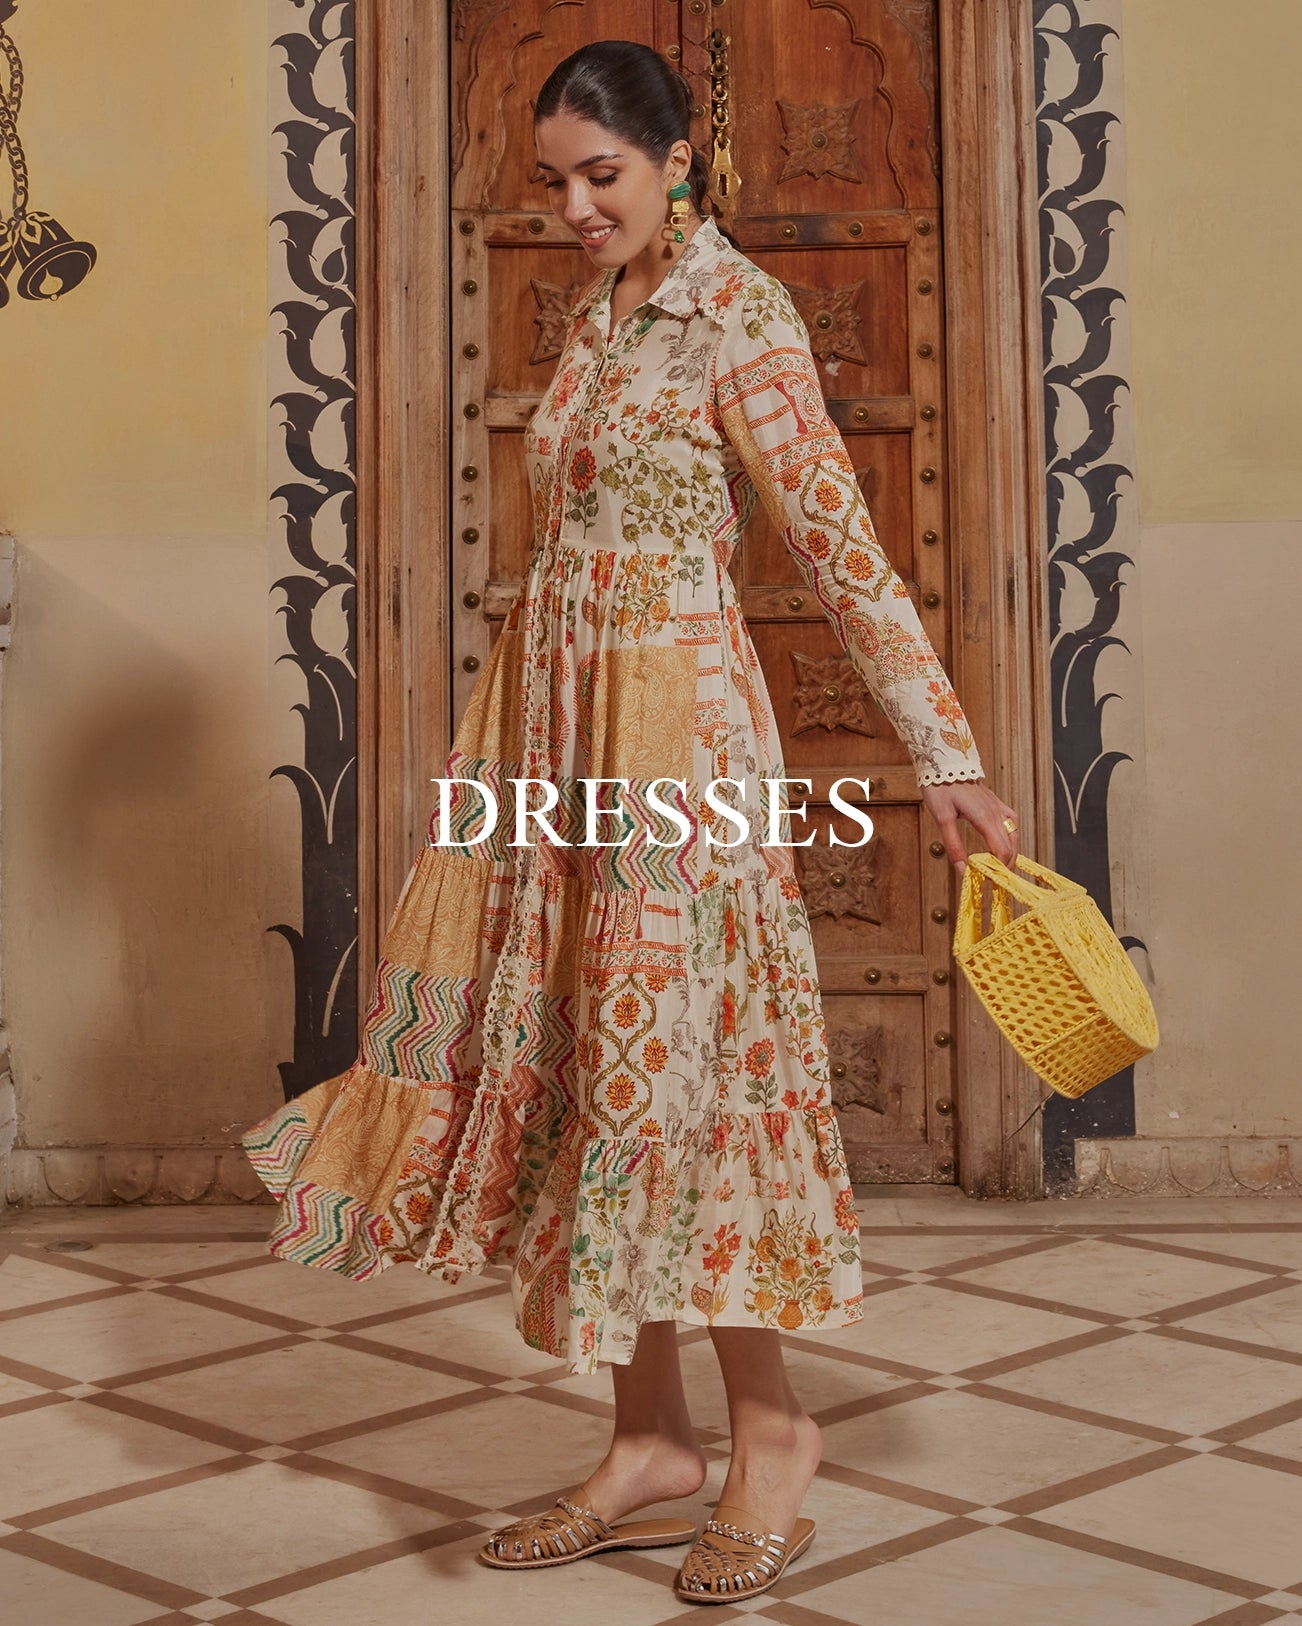 Pista Green Archives - Online Shopping for Indian Dresses-Saree,Salwar  Kameez,Lehenga,Mens Suits in USA,UK